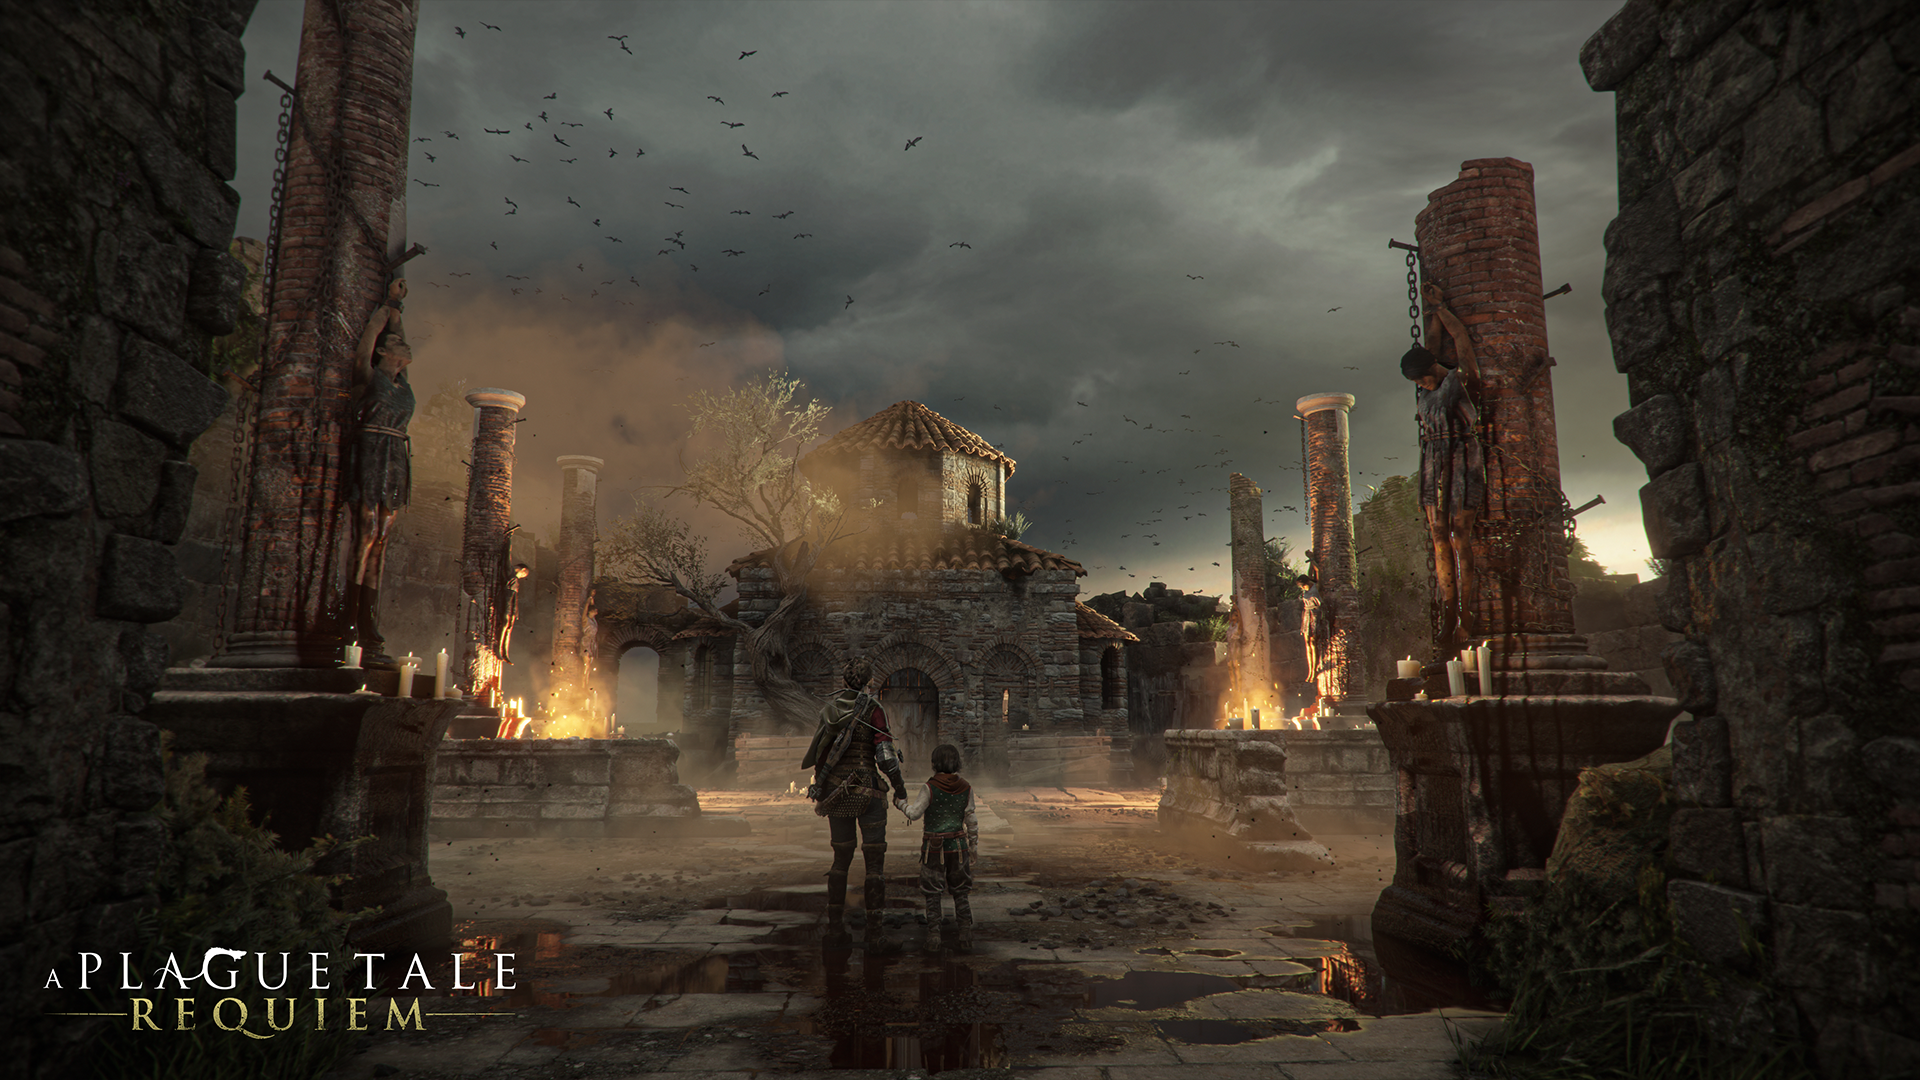 A Plague Tale Requiem - Brutal Stealth & Combat Gameplay 